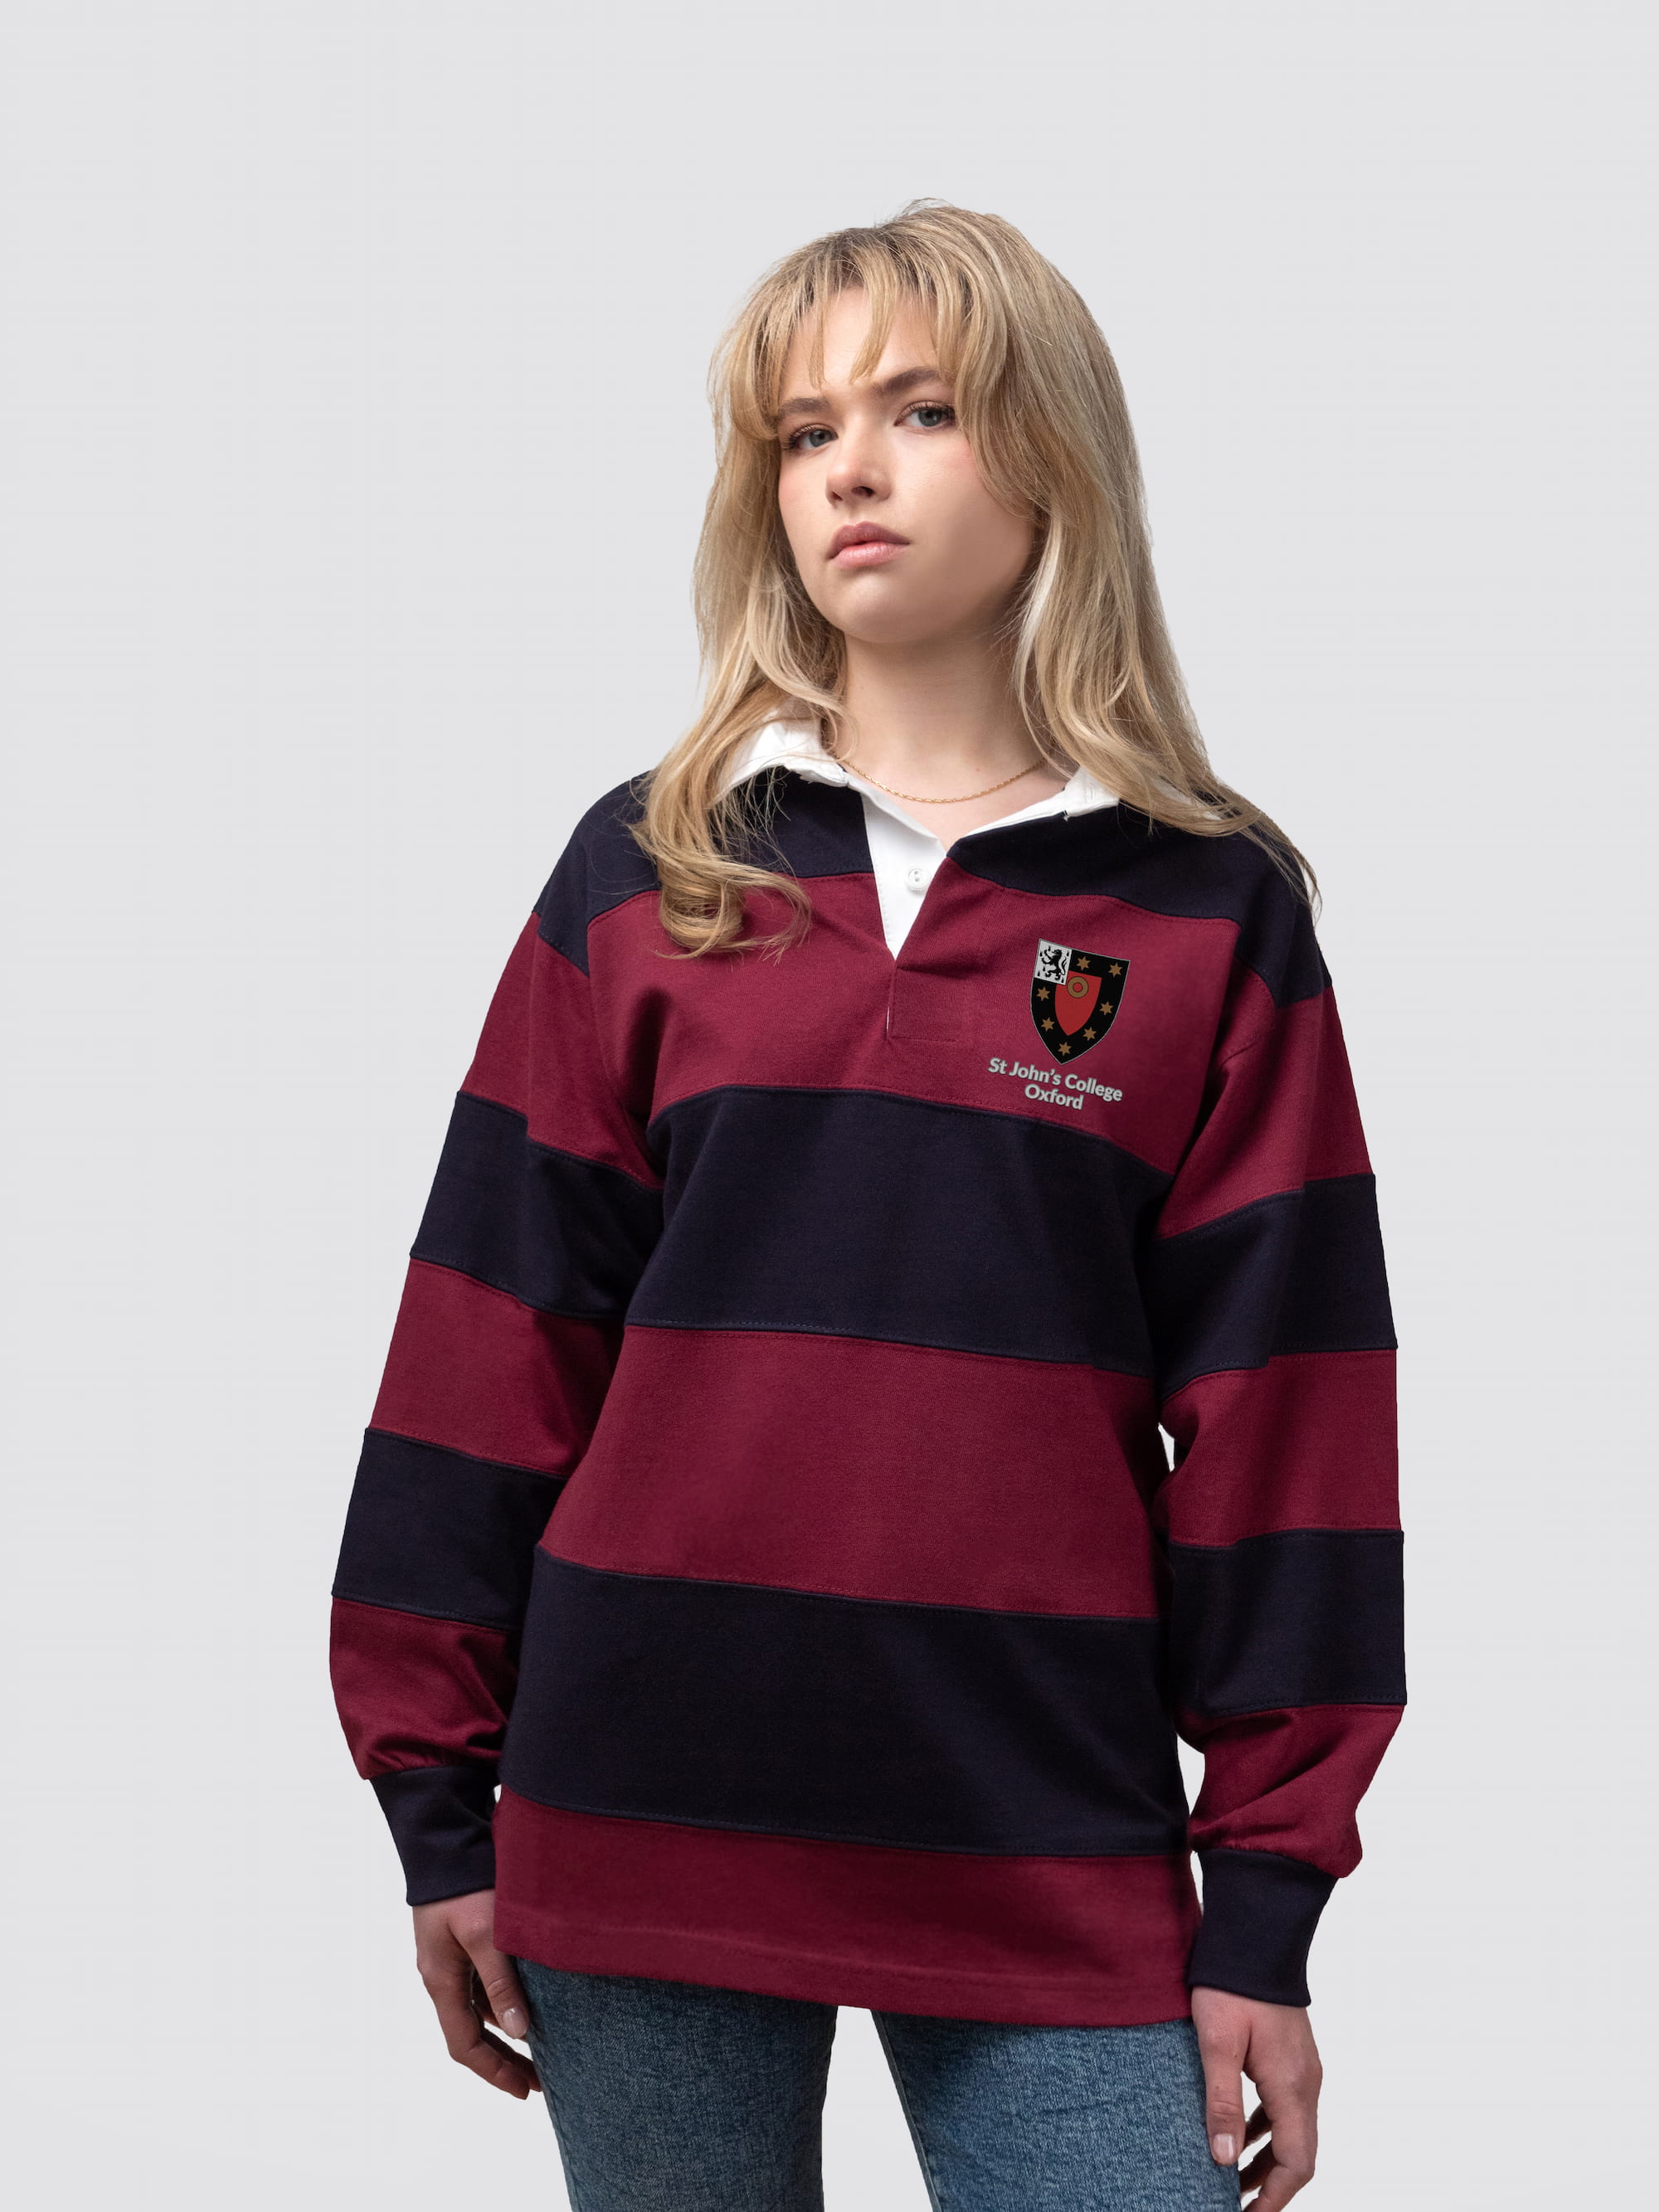 St John's College Oxford JCR Unisex Striped Rugby Shirt